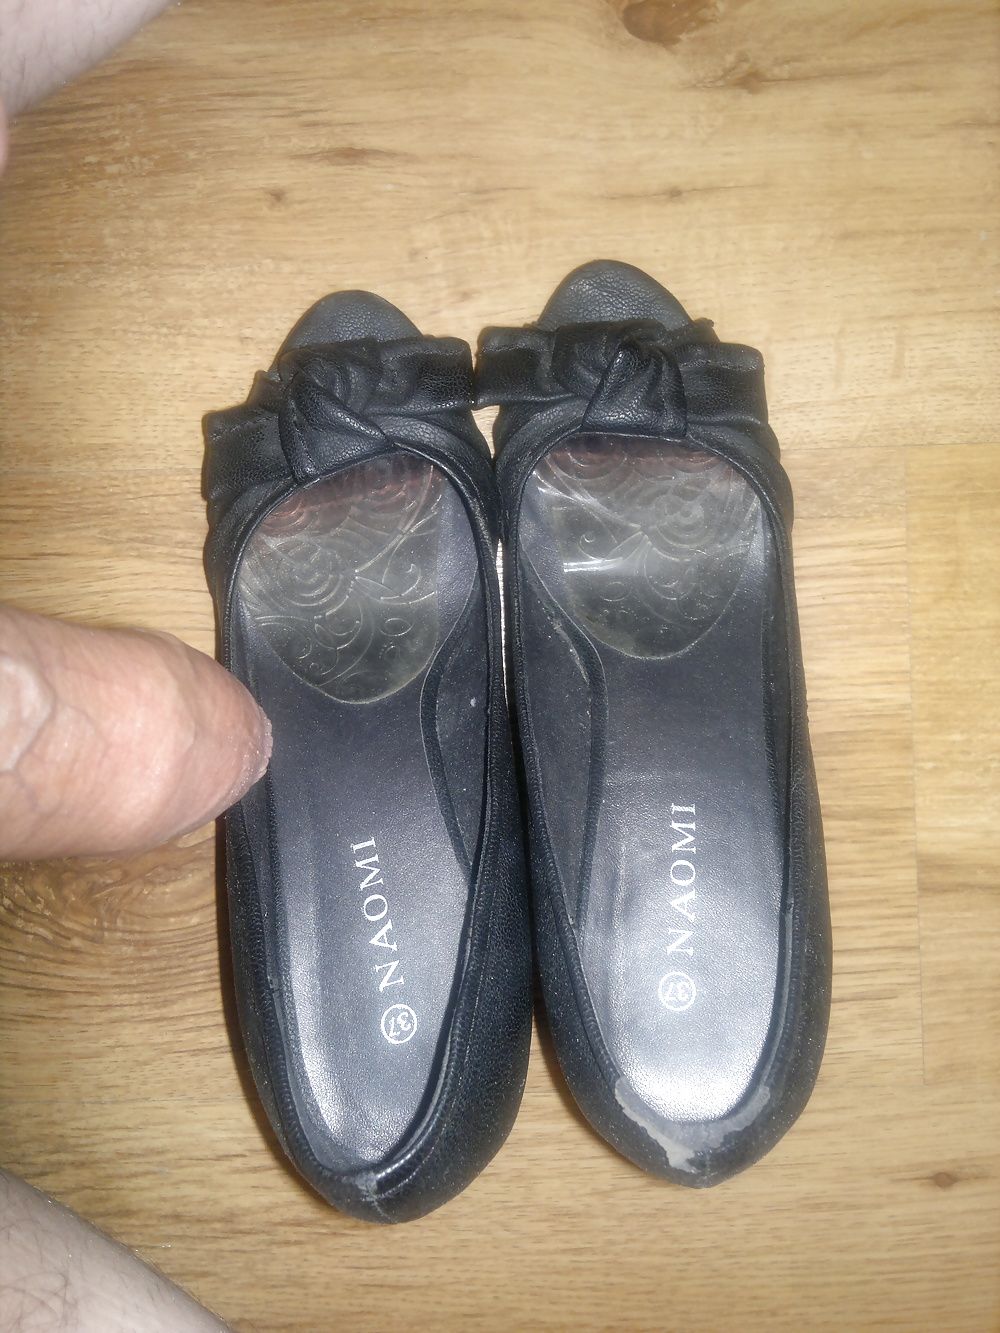 cuming on black heels #2